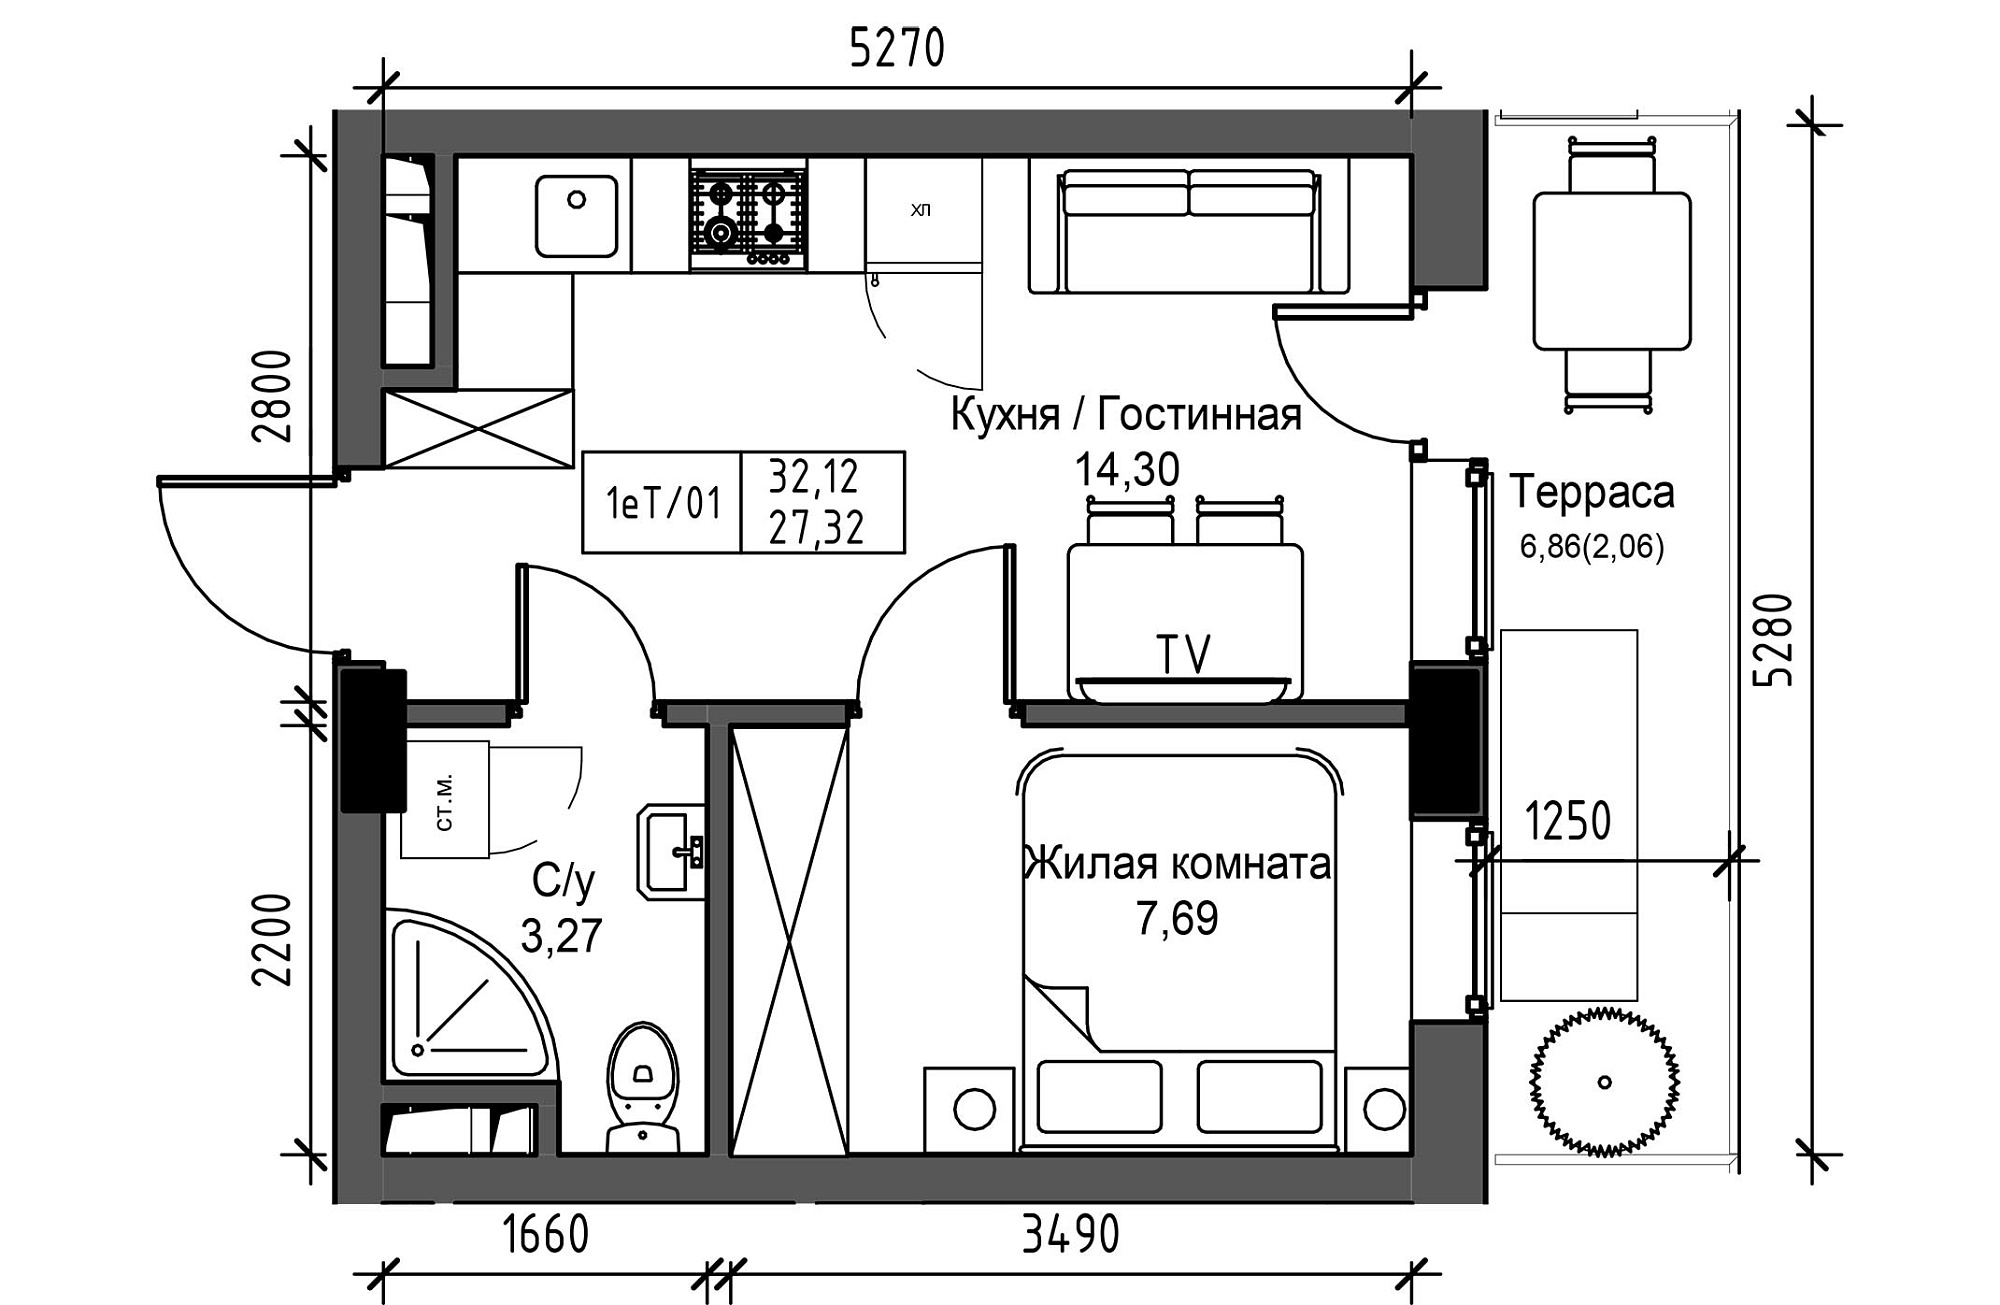 Планування 1-к квартира площею 27.32м2, UM-003-08/0081.